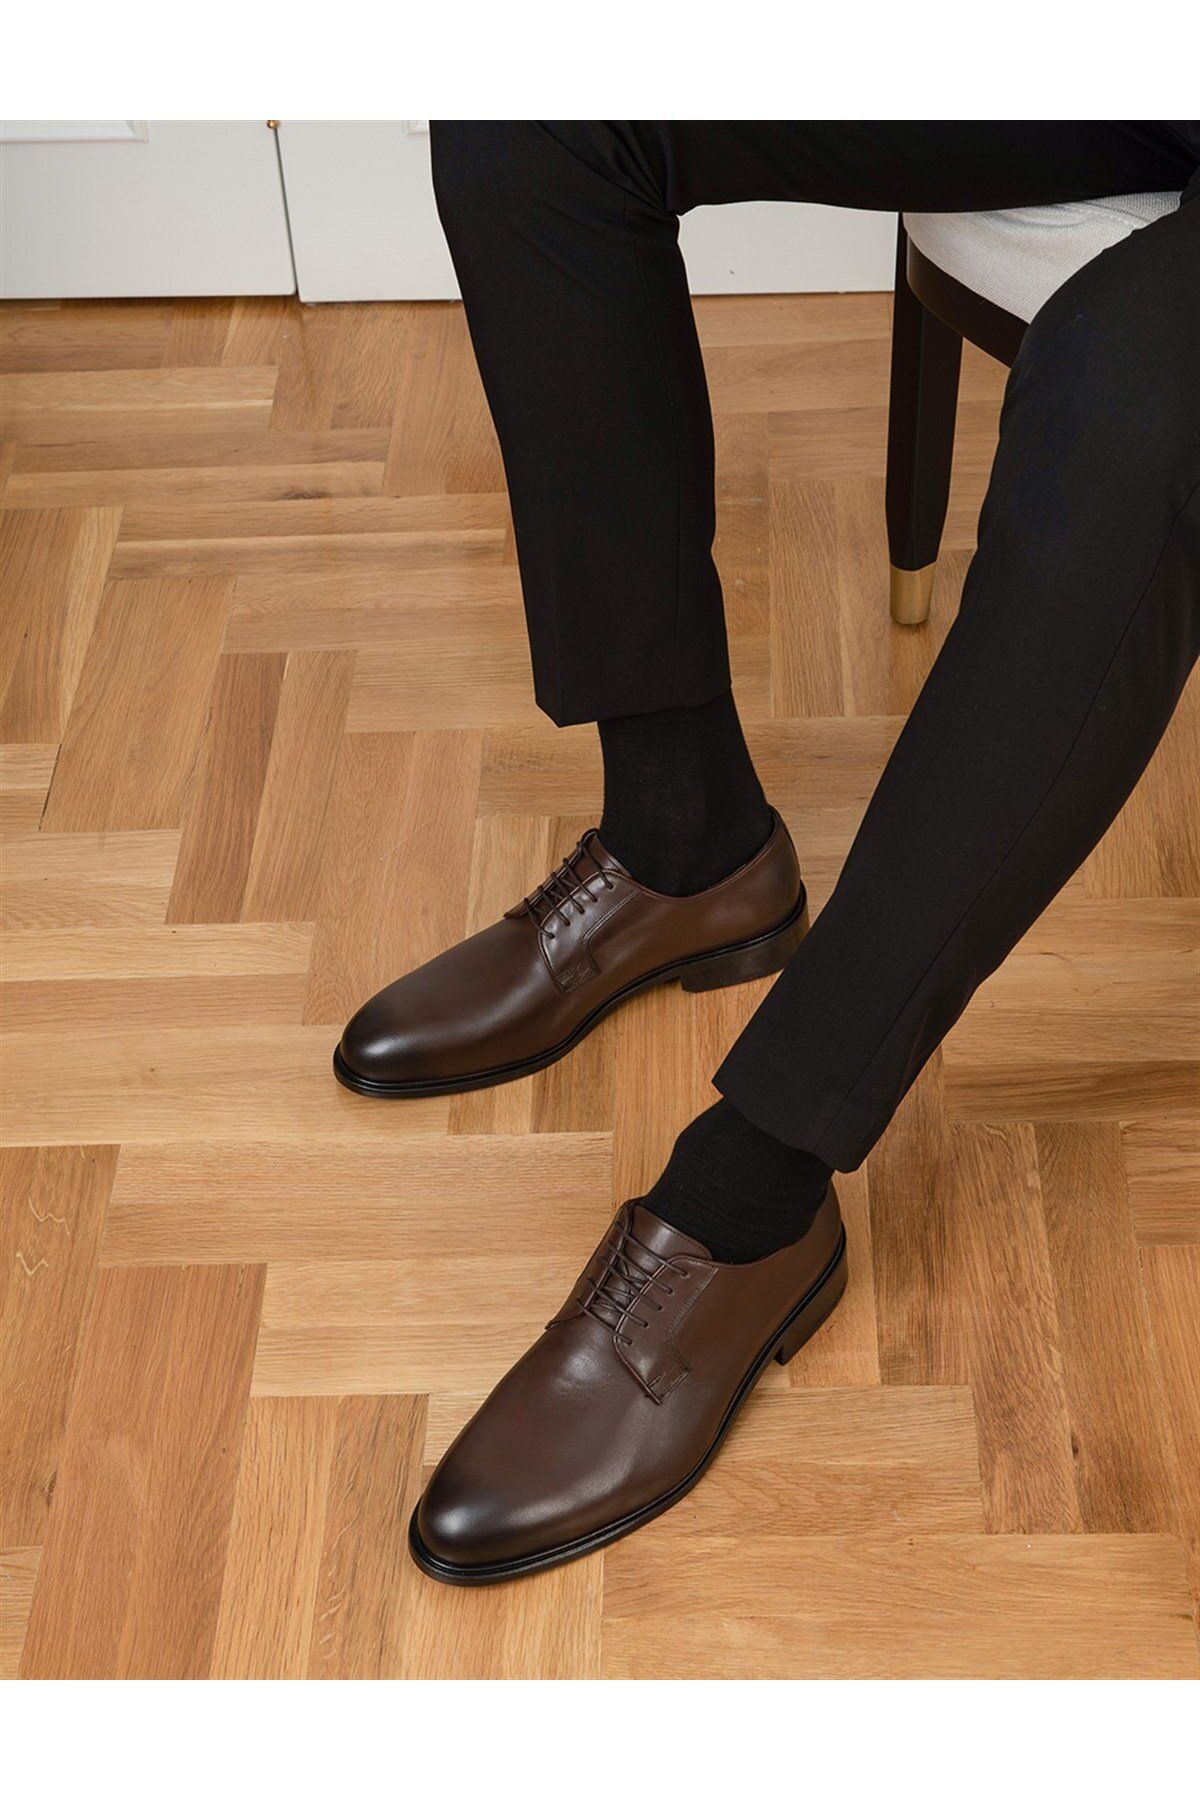 İlvi Diss Hakiki Napa Deri Erkek Kahverengi Klasik Ayakkabı